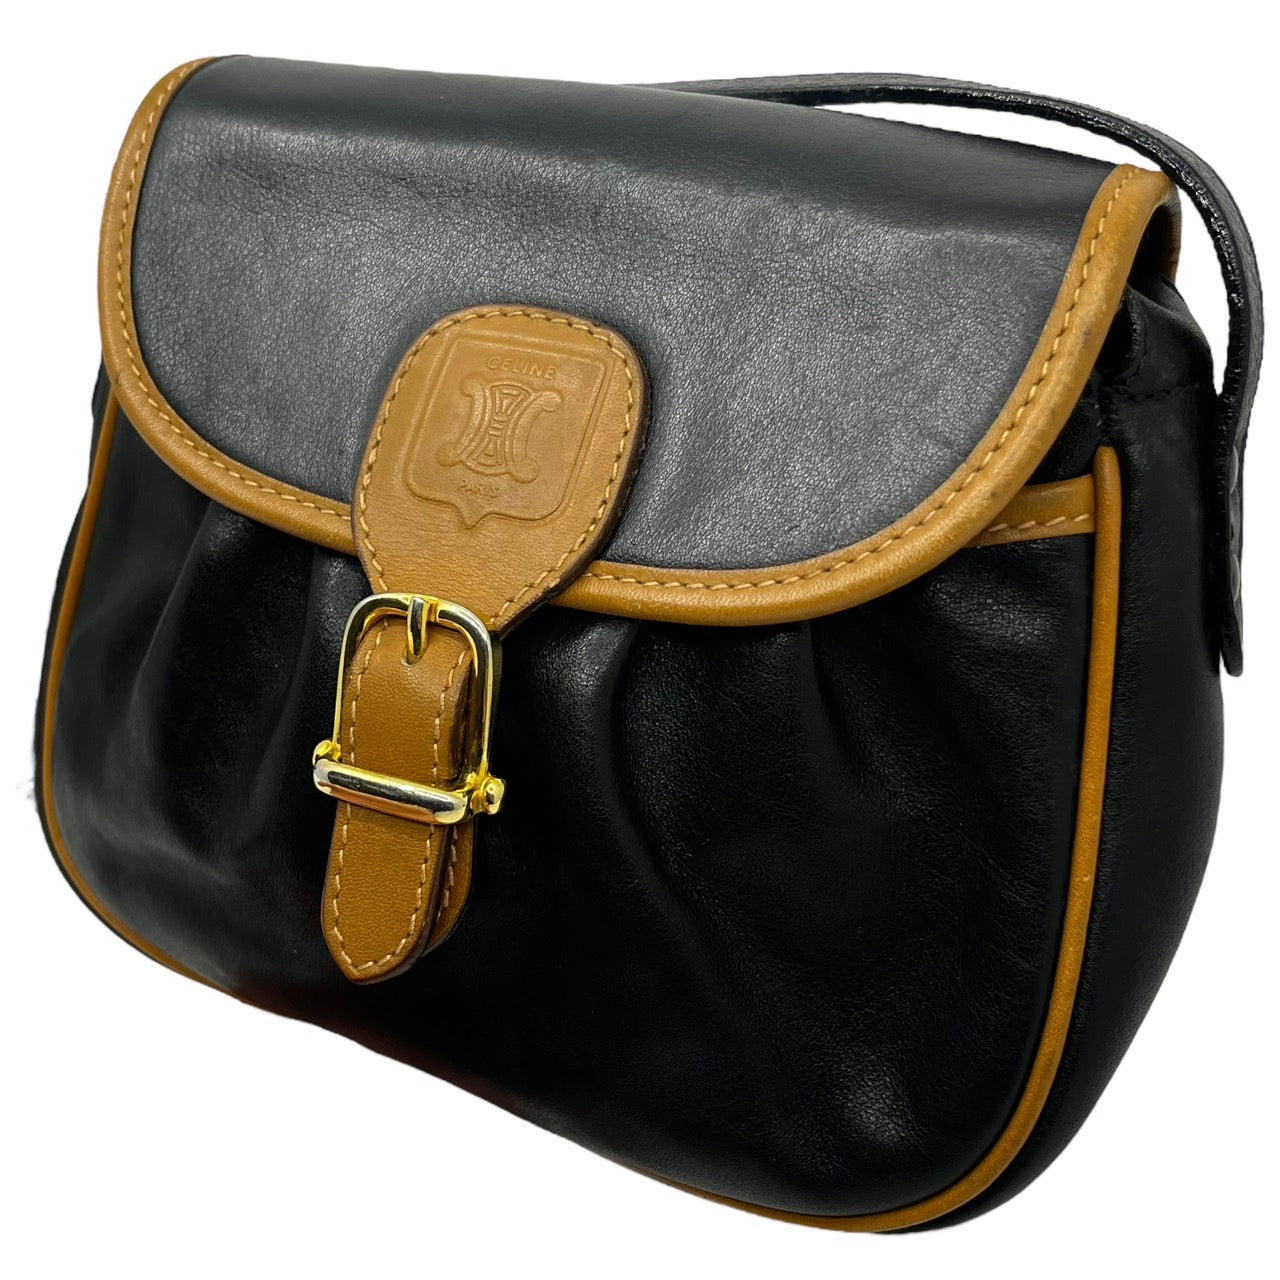 CELINE(セリーヌ) triomphe mini leather shoulder bag/トリオンフミニレザーショルダーバッグ M07 OLD  CELINE/ヴィンテージ